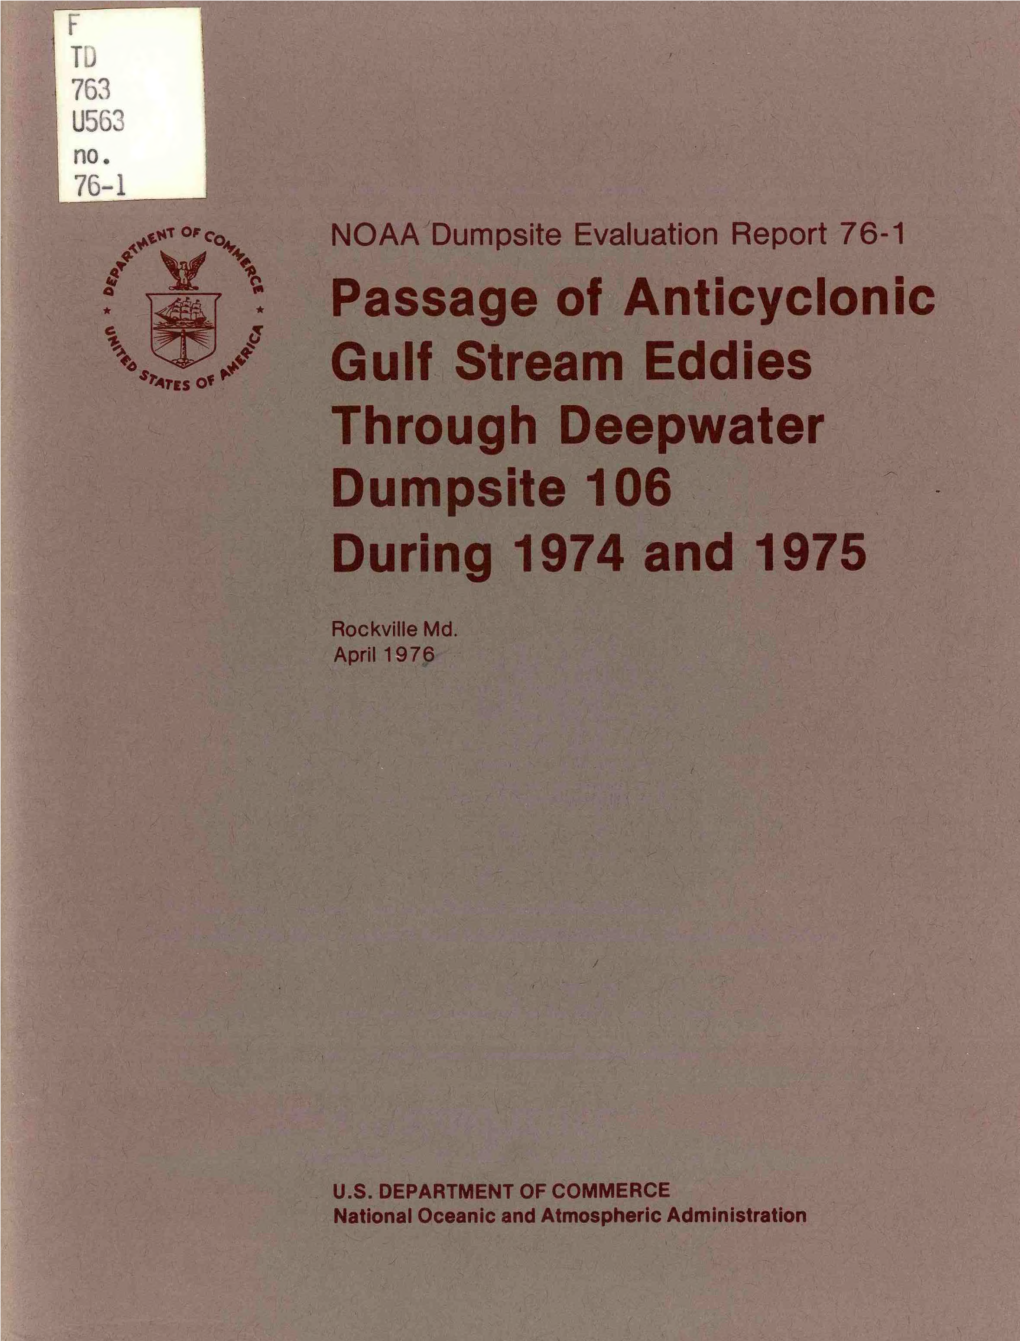 NOAA Dumpsite Evaluation Report 76-1 Passage of Anticyclonic Gulf